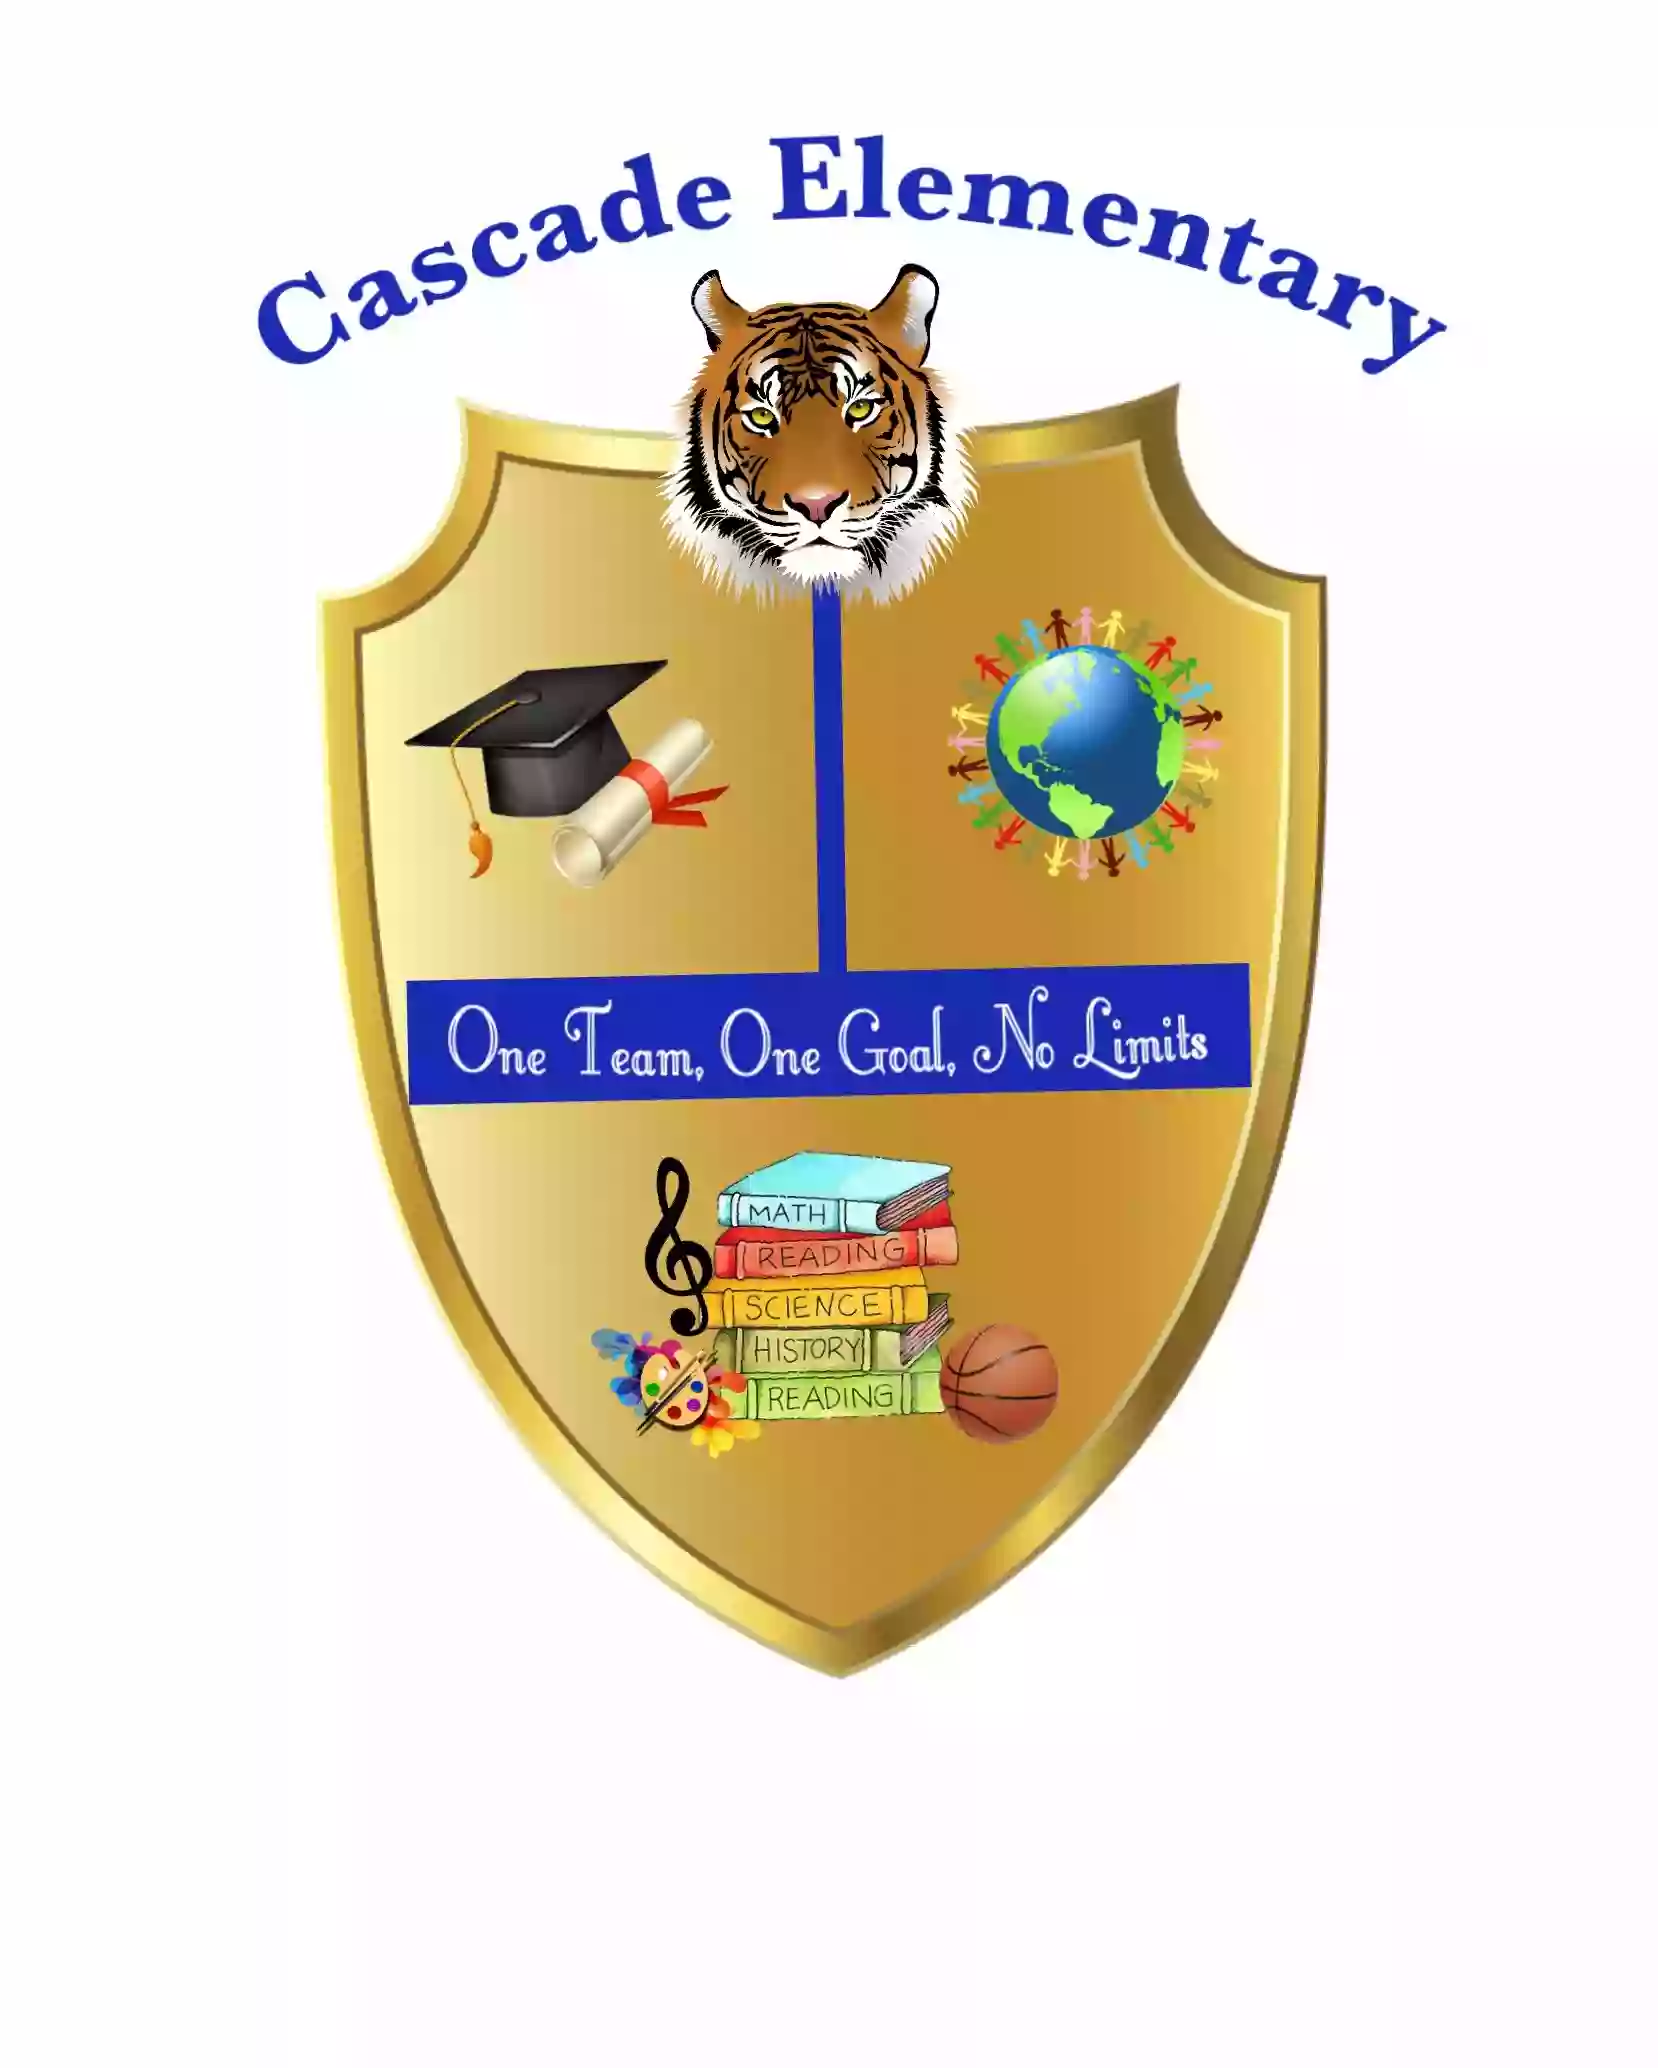 Cascade Elementary School